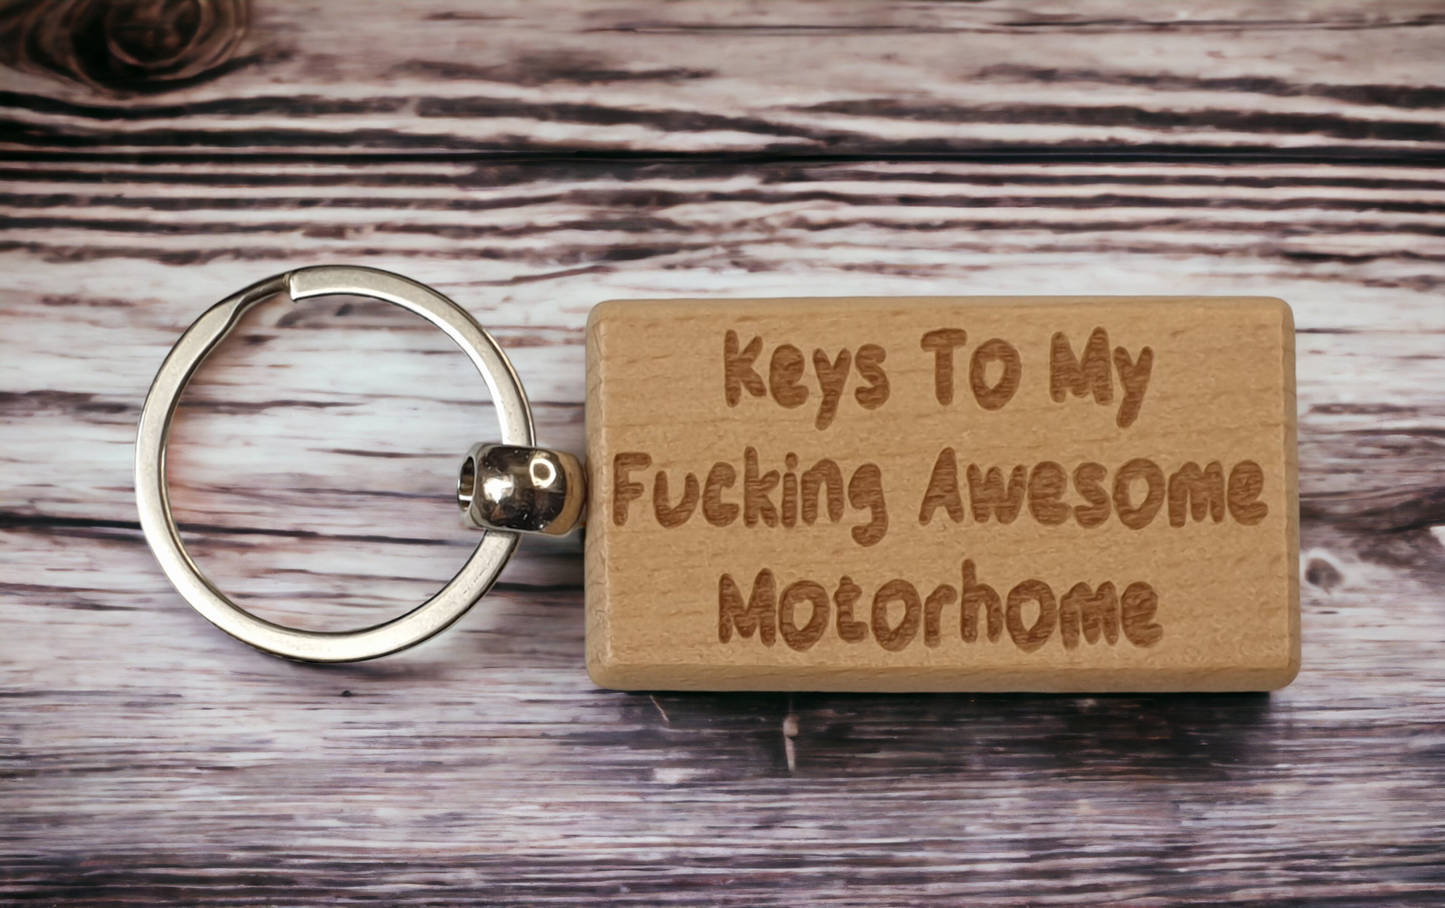 Motorhome Keyring Gift - Keys To My Fucking Awesome Motorhome - Nice Cute Engraved Wooden Key Fob Novelty Custom Present